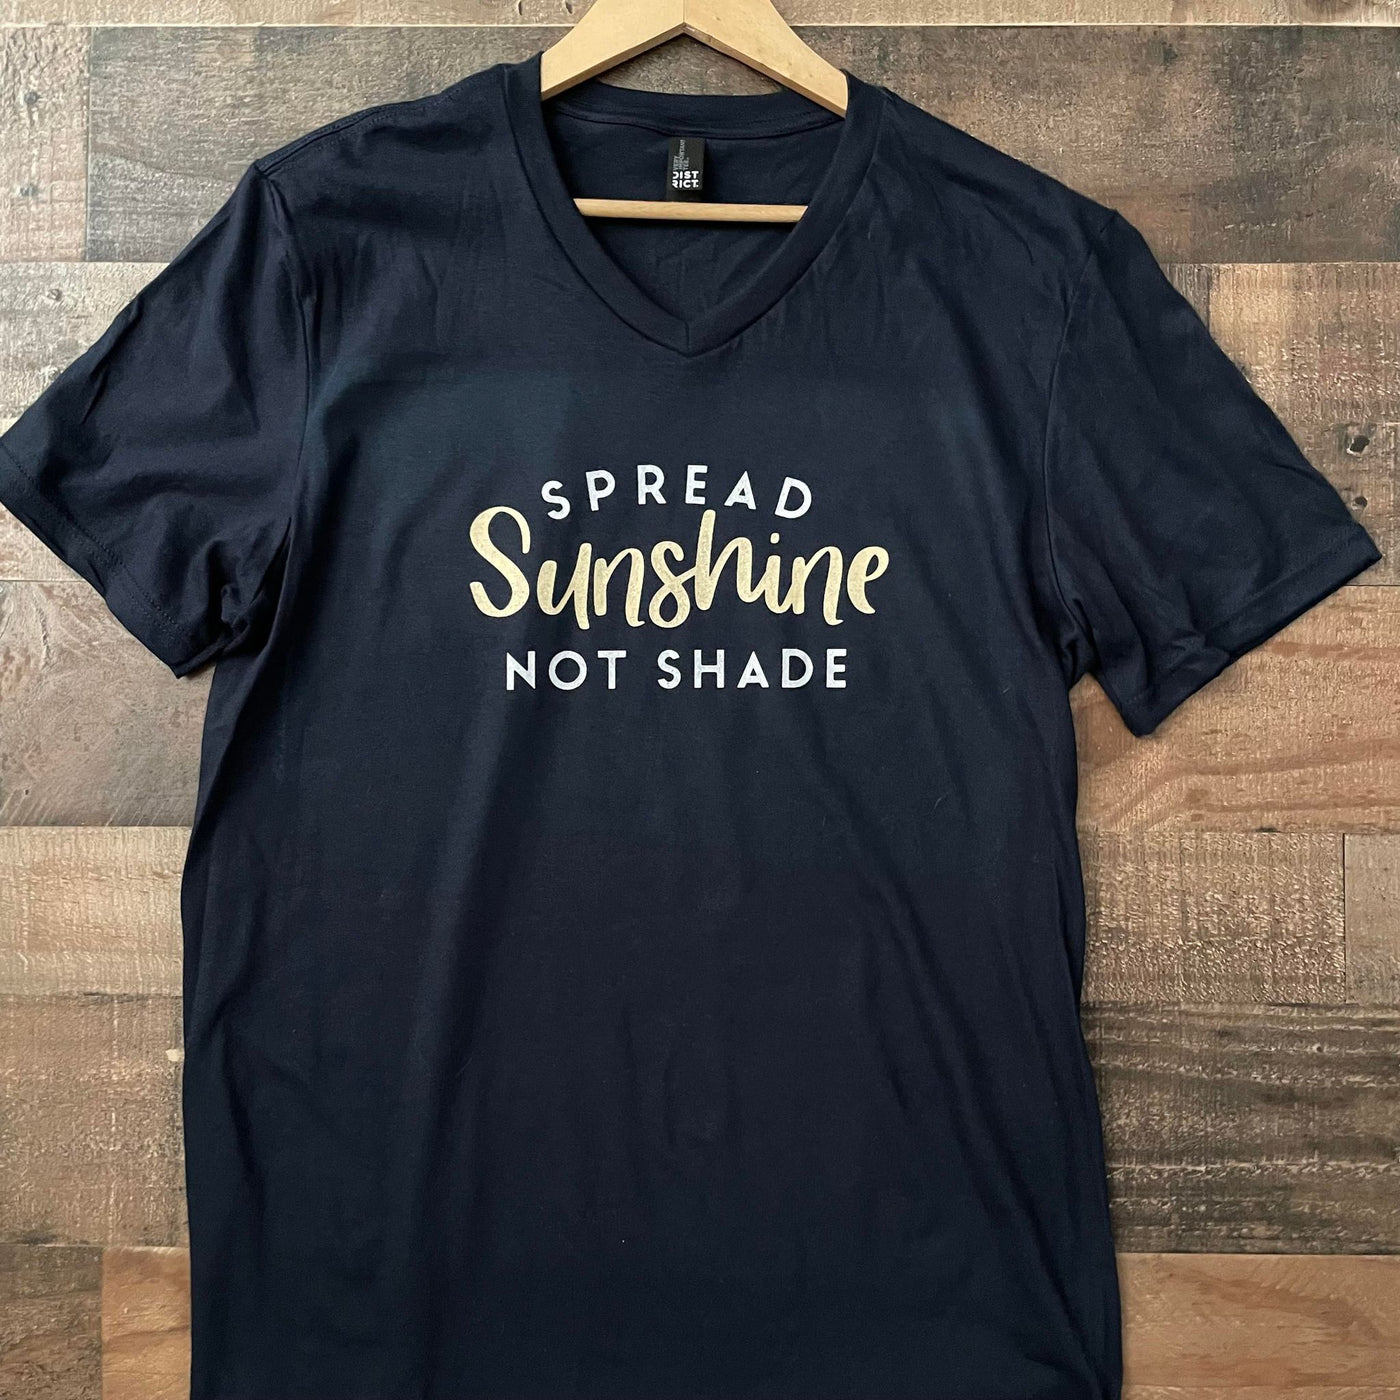 Spread Sunshine Not Shade Graphic Tee Shirt